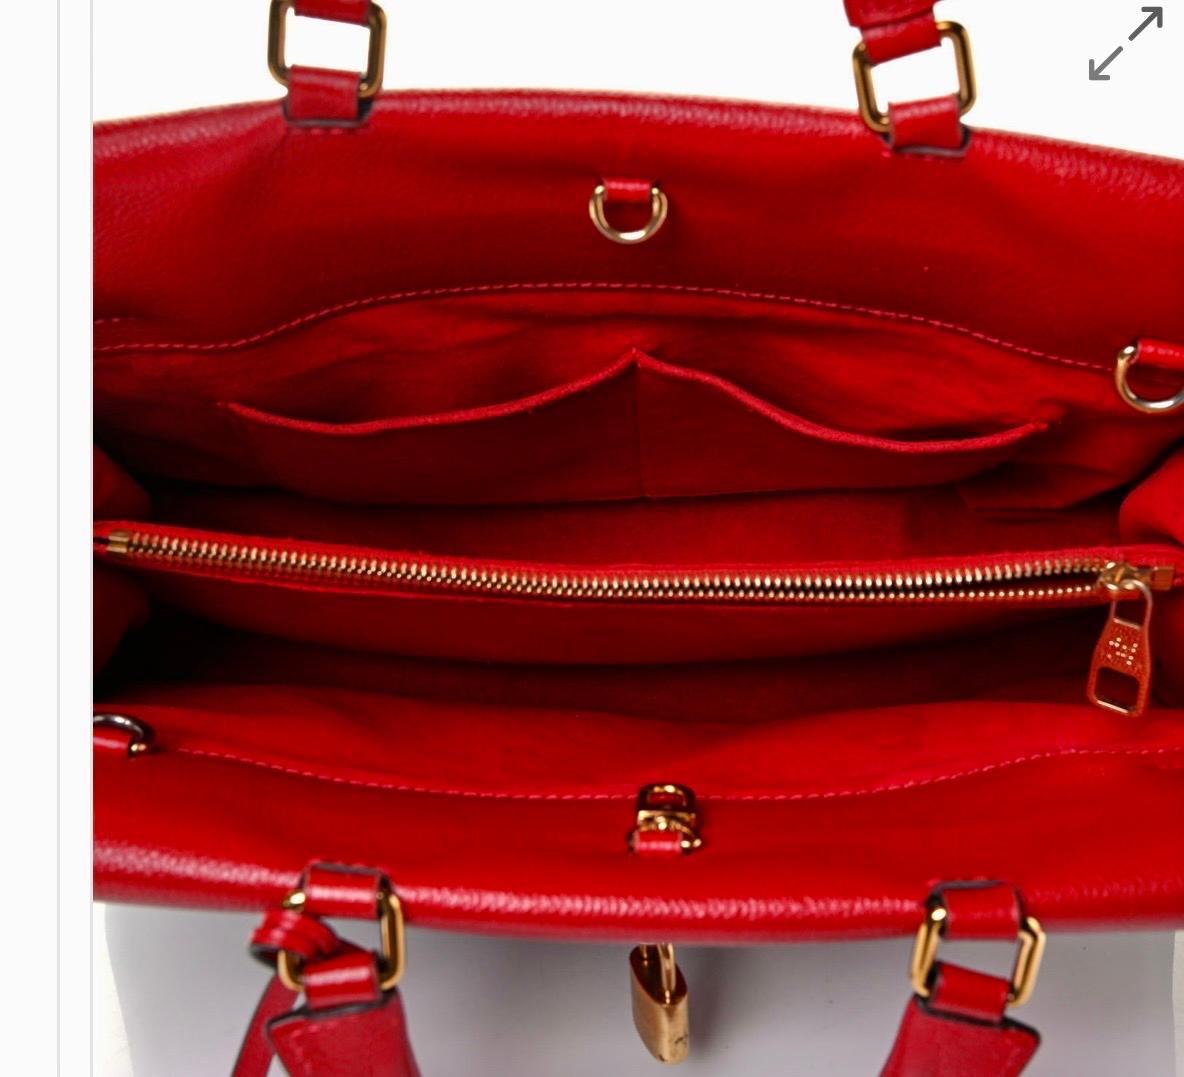 Women's Louis Vuitton Venus Cherry Handbag Monogram Canvas and Leather Satchel Like New